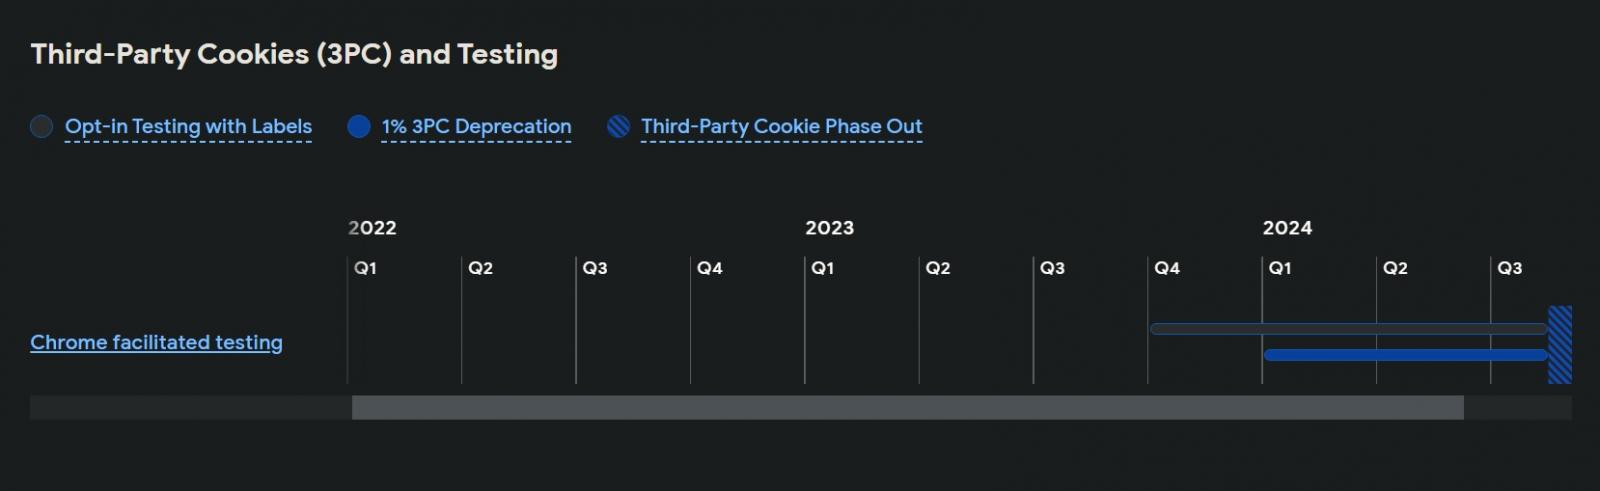 Third-party cookie deprecation roadmap